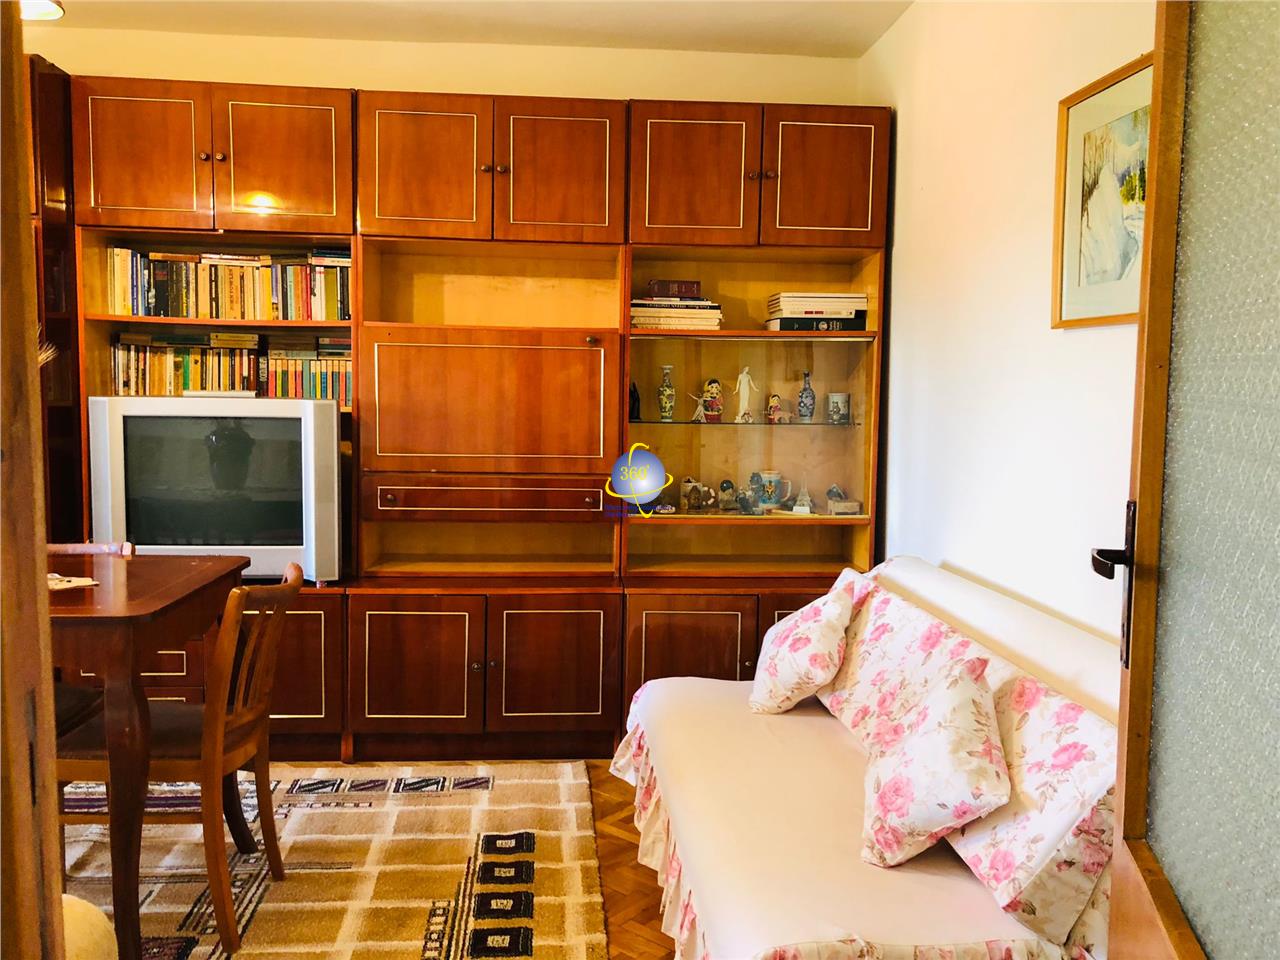 Inchiriere apartament 4 camere, Gradina Botanica